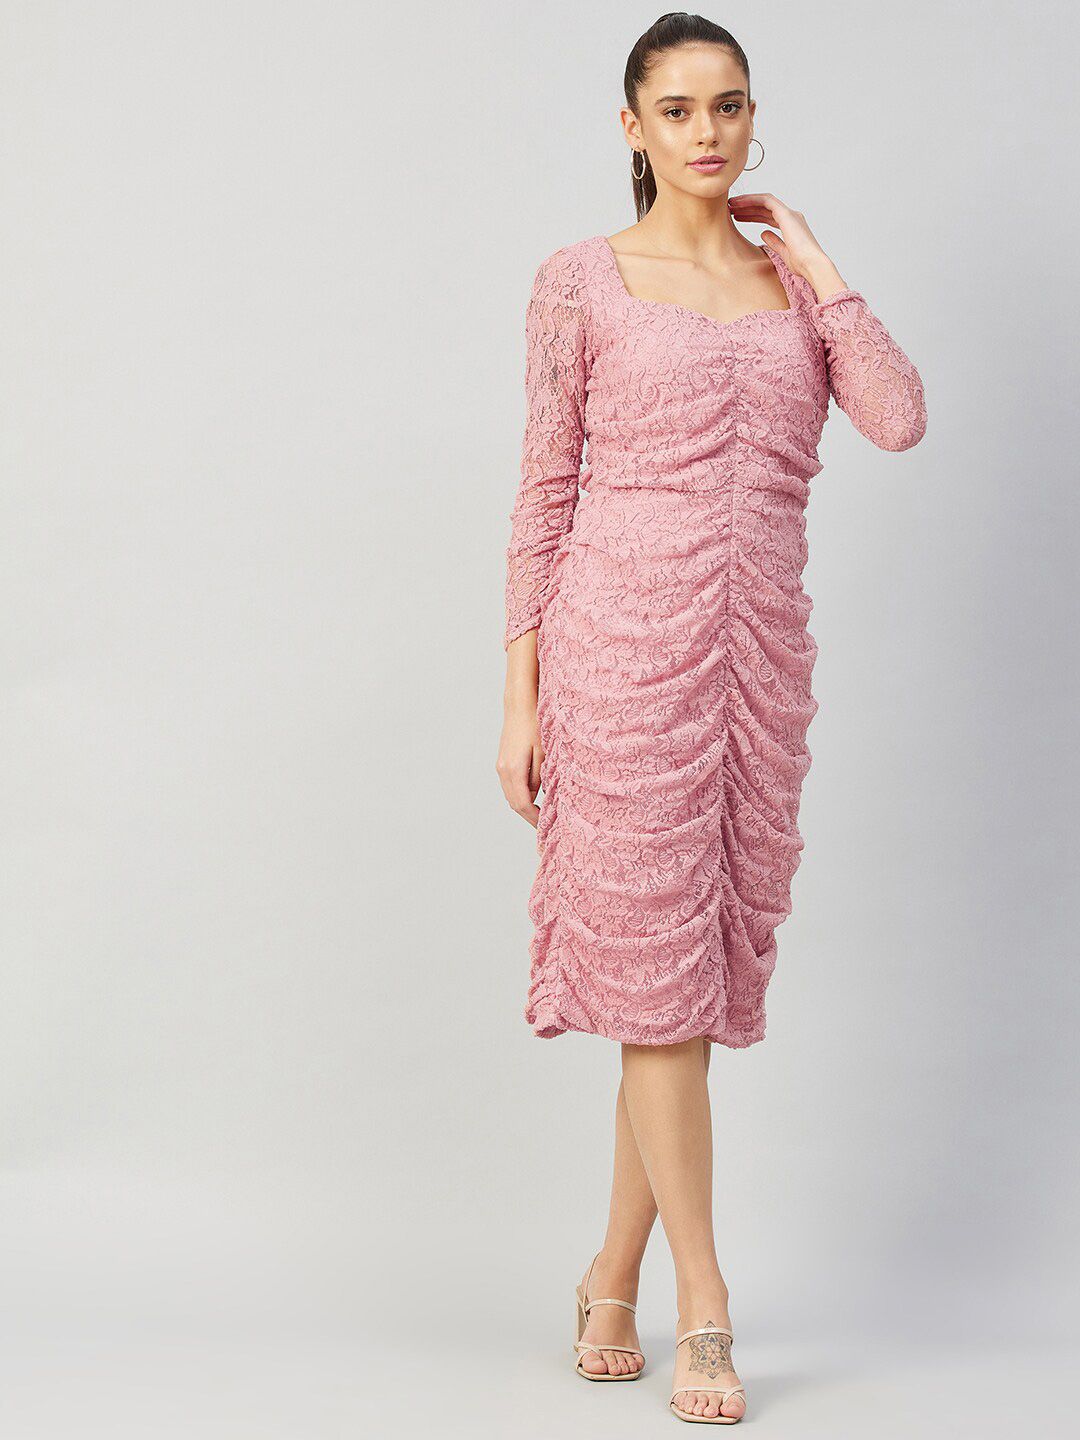 Athena Pink Lace Sheath Midi Dress Price in India